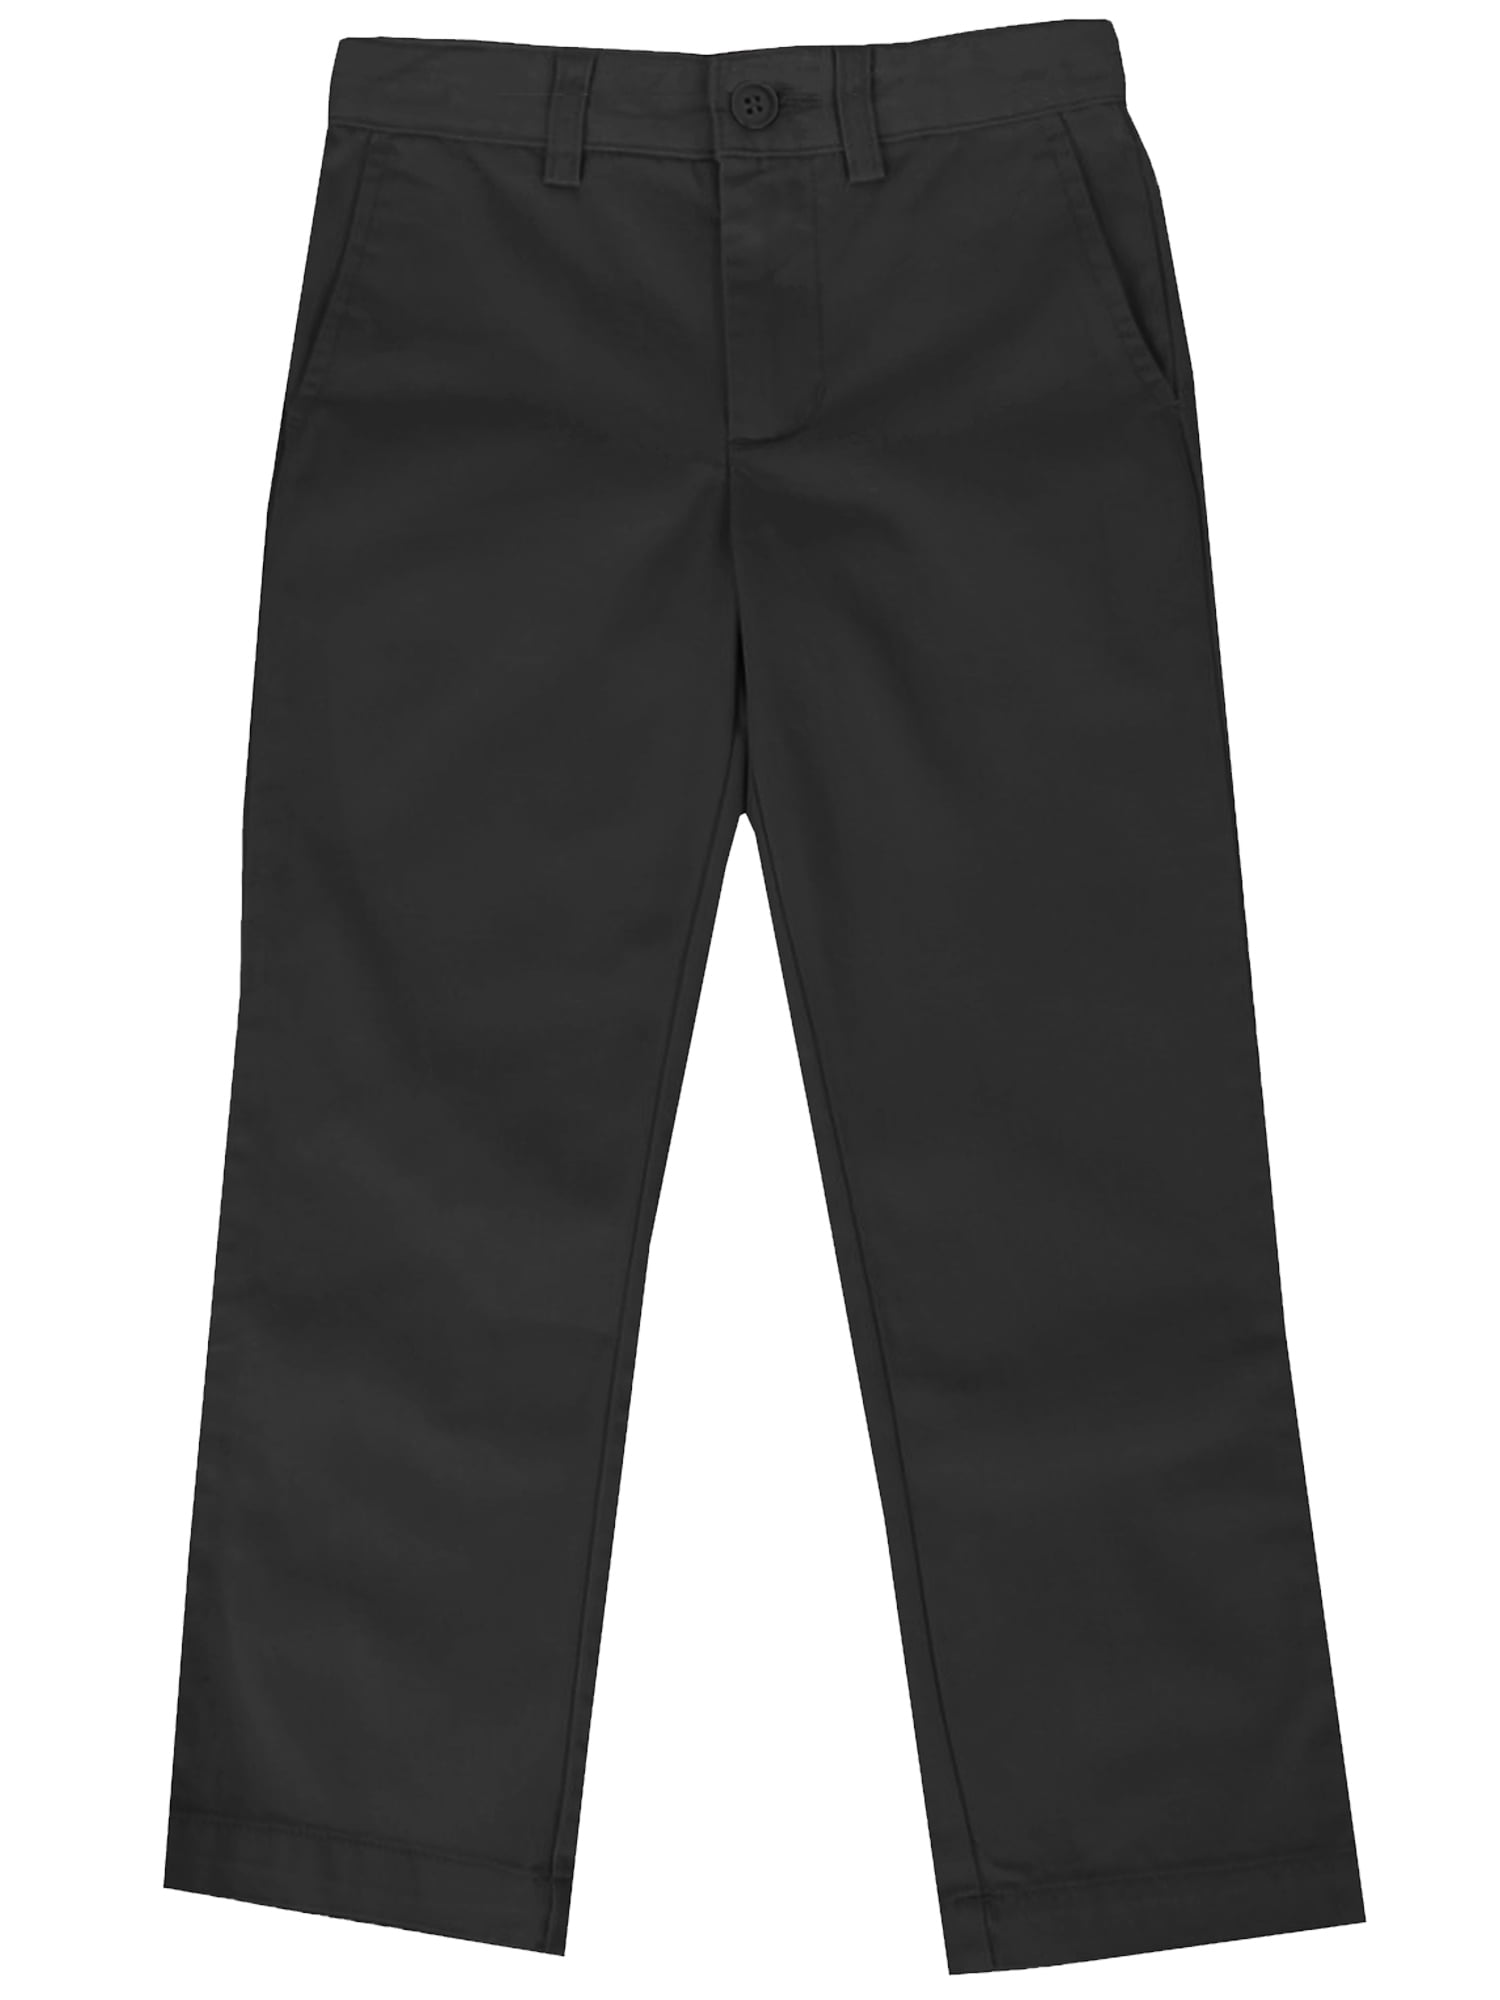 Ex BHS Boys Black Grey Navy School Trousers Regular/ Plus/ Slim Fit Age 4-16 